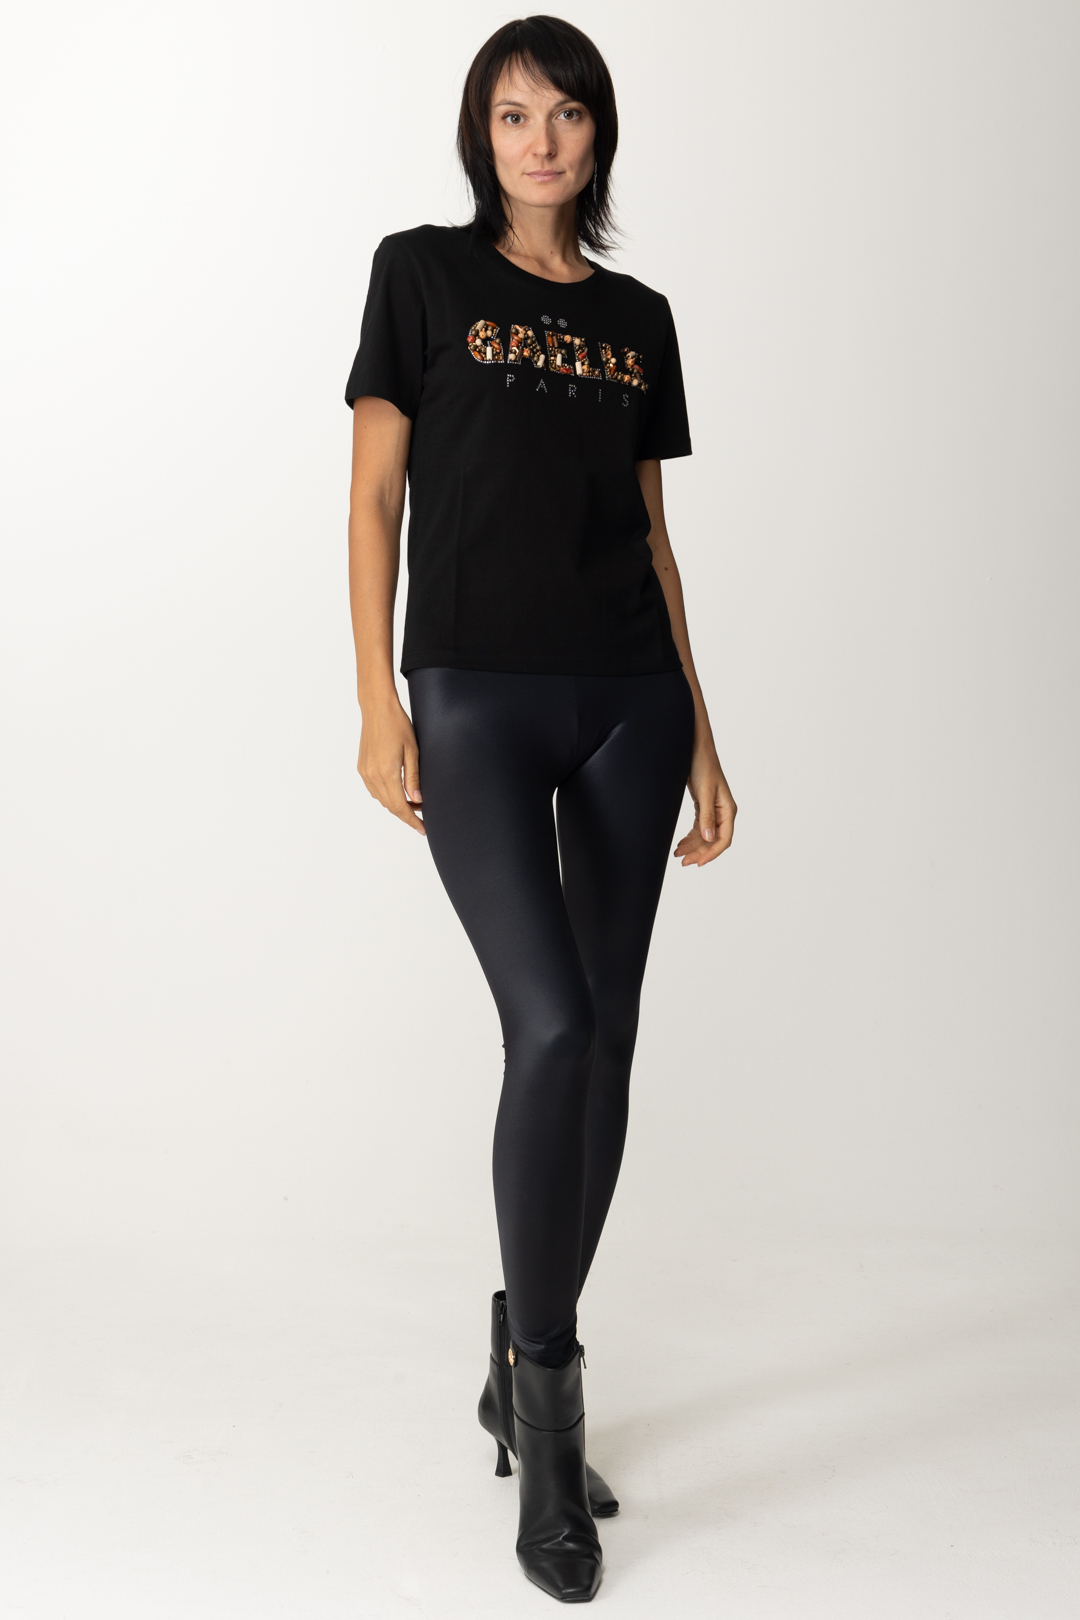 Vista previa: Gaelle Paris Camiseta con logo bordado Nero